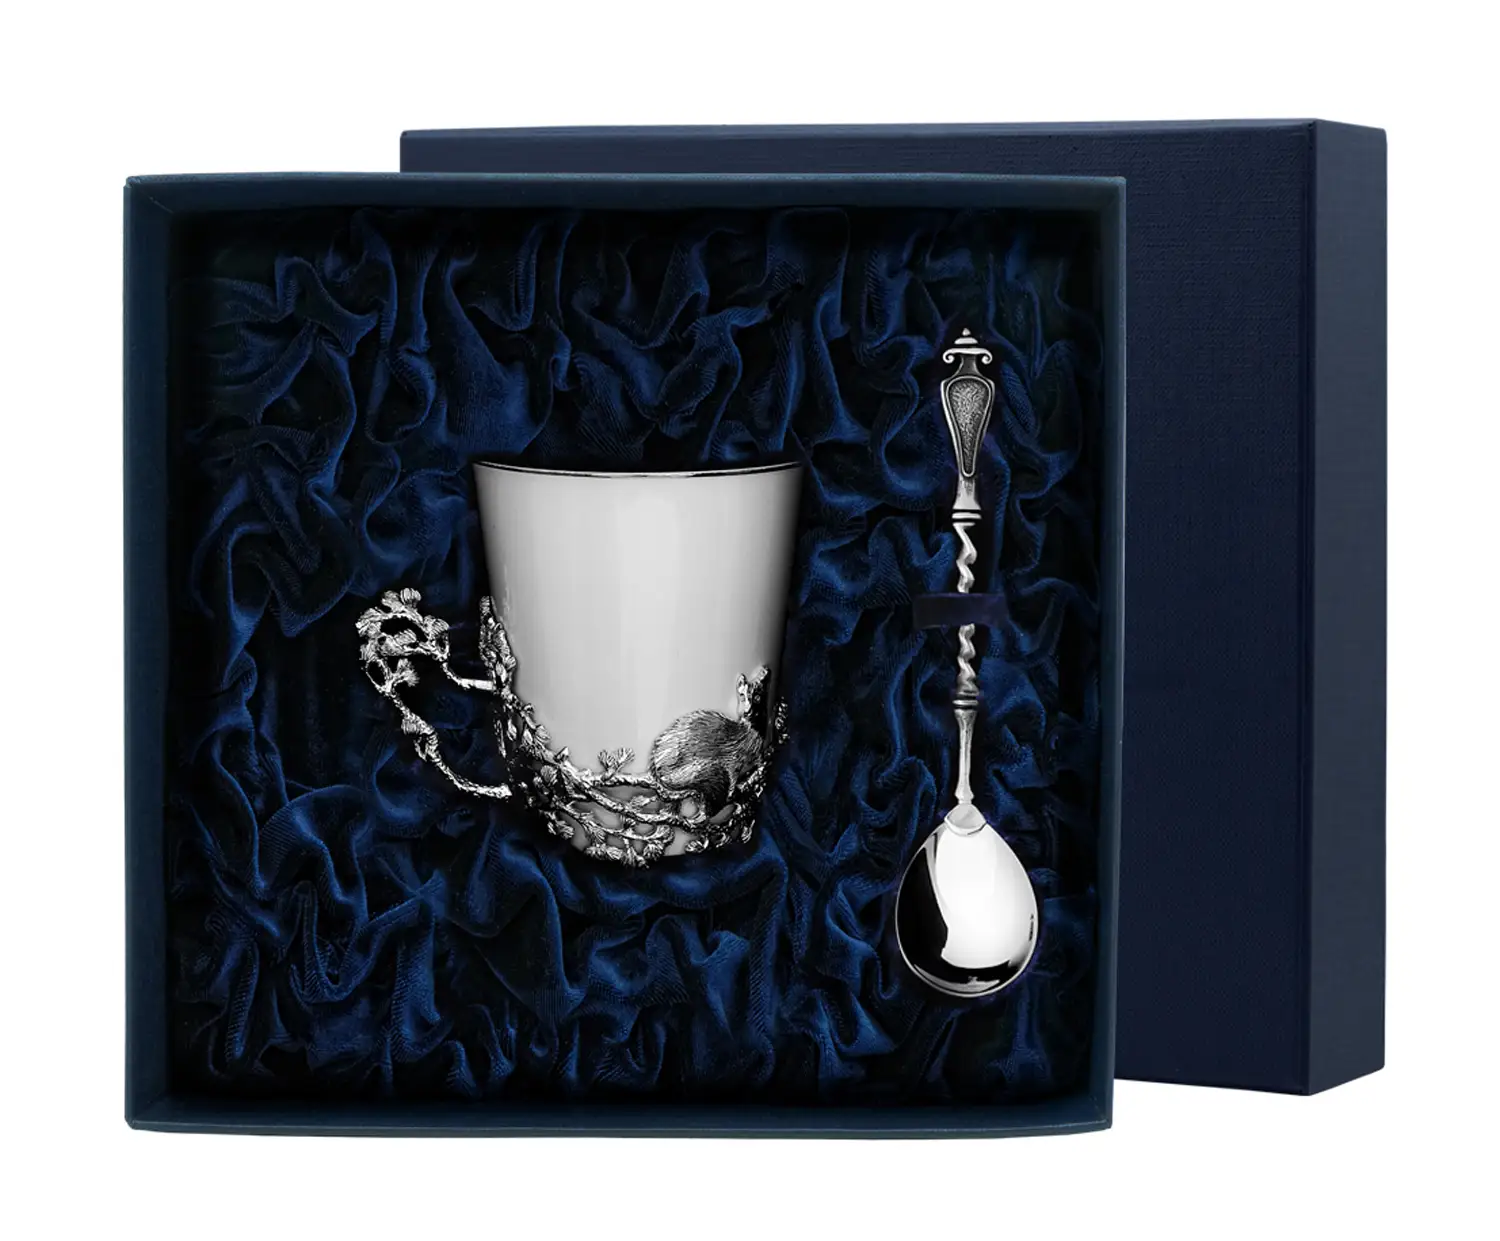 Набор чайная чашка Куница: ложка, чашка (Серебро 925) набор чайная чашка дятел ложка чашка серебро 925